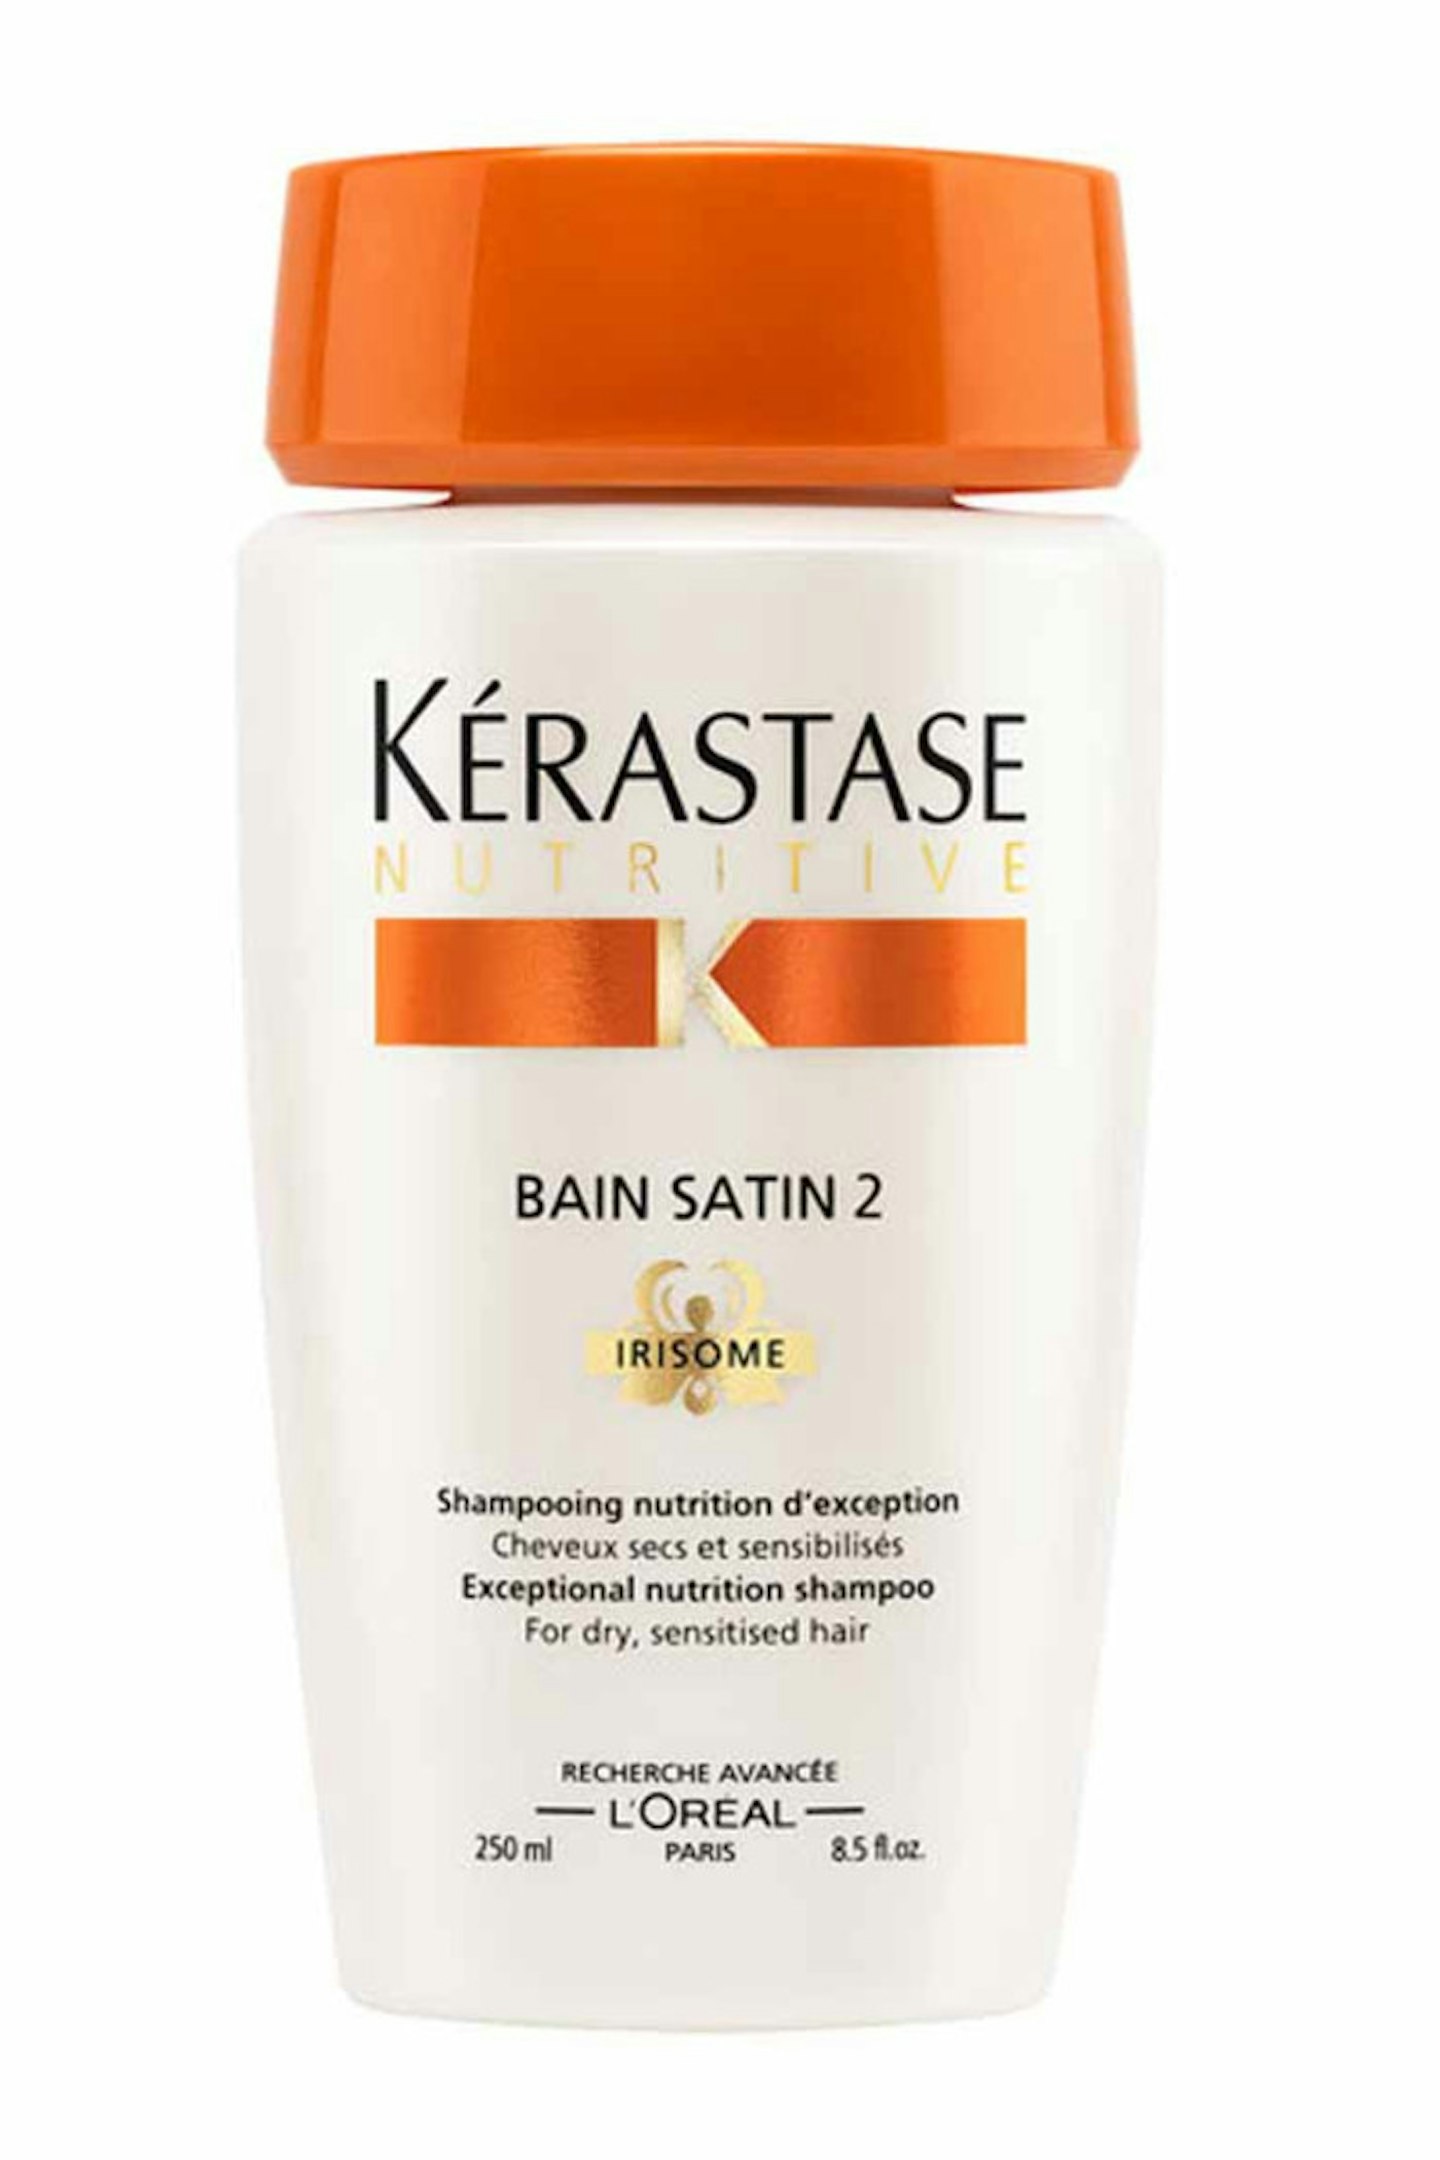 4. Kerastase Nutritive Bain Satin 2 Complete Nutrition Shampoo, £17